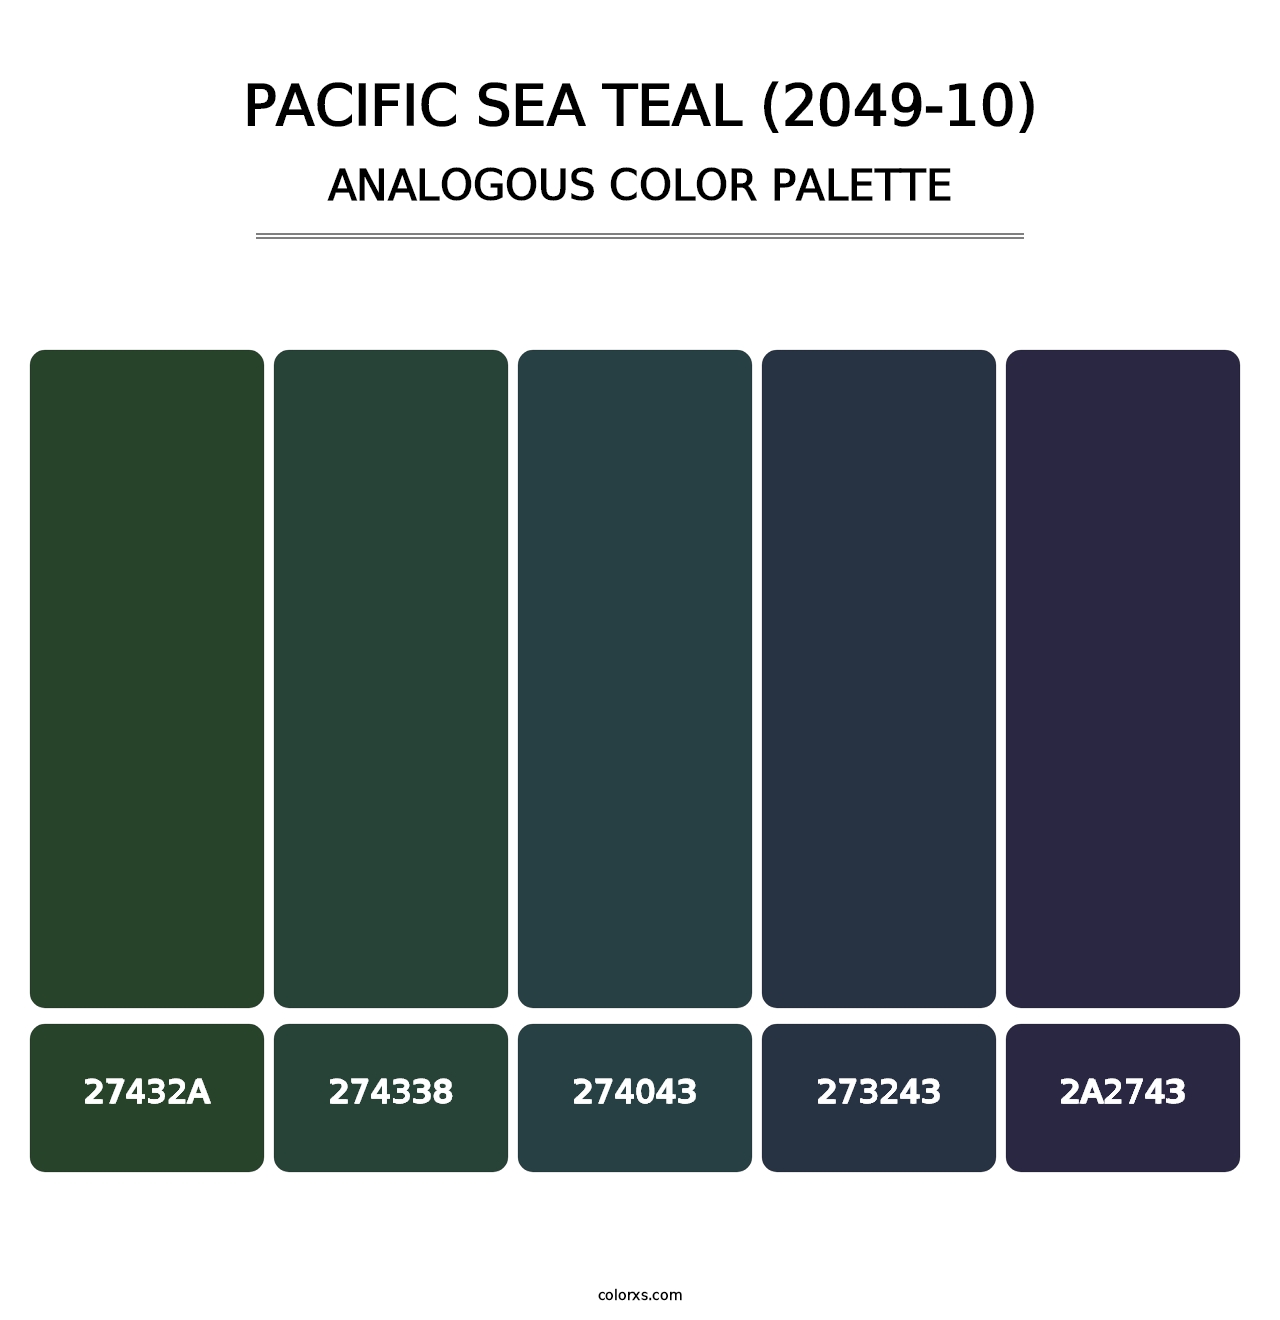 Pacific Sea Teal (2049-10) - Analogous Color Palette